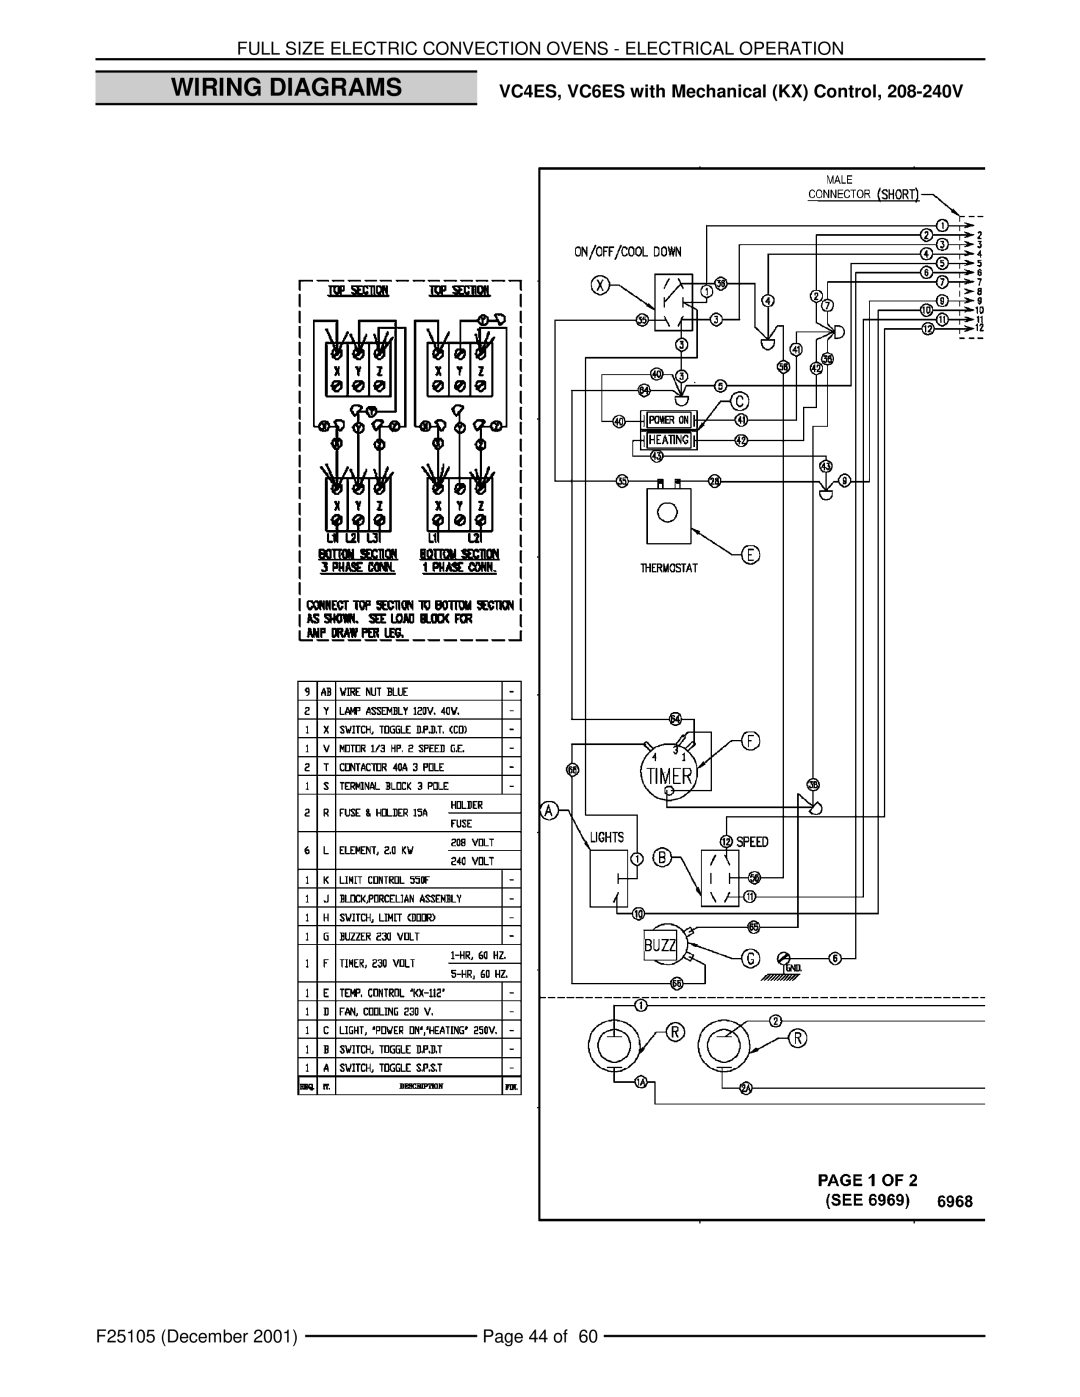 Vulcan-Hart VC6EC, VCIEC, VC6ED, VC4ED service manual Wiring Diagrams, VC4ES, VC6ES with Mechanical KX Control 